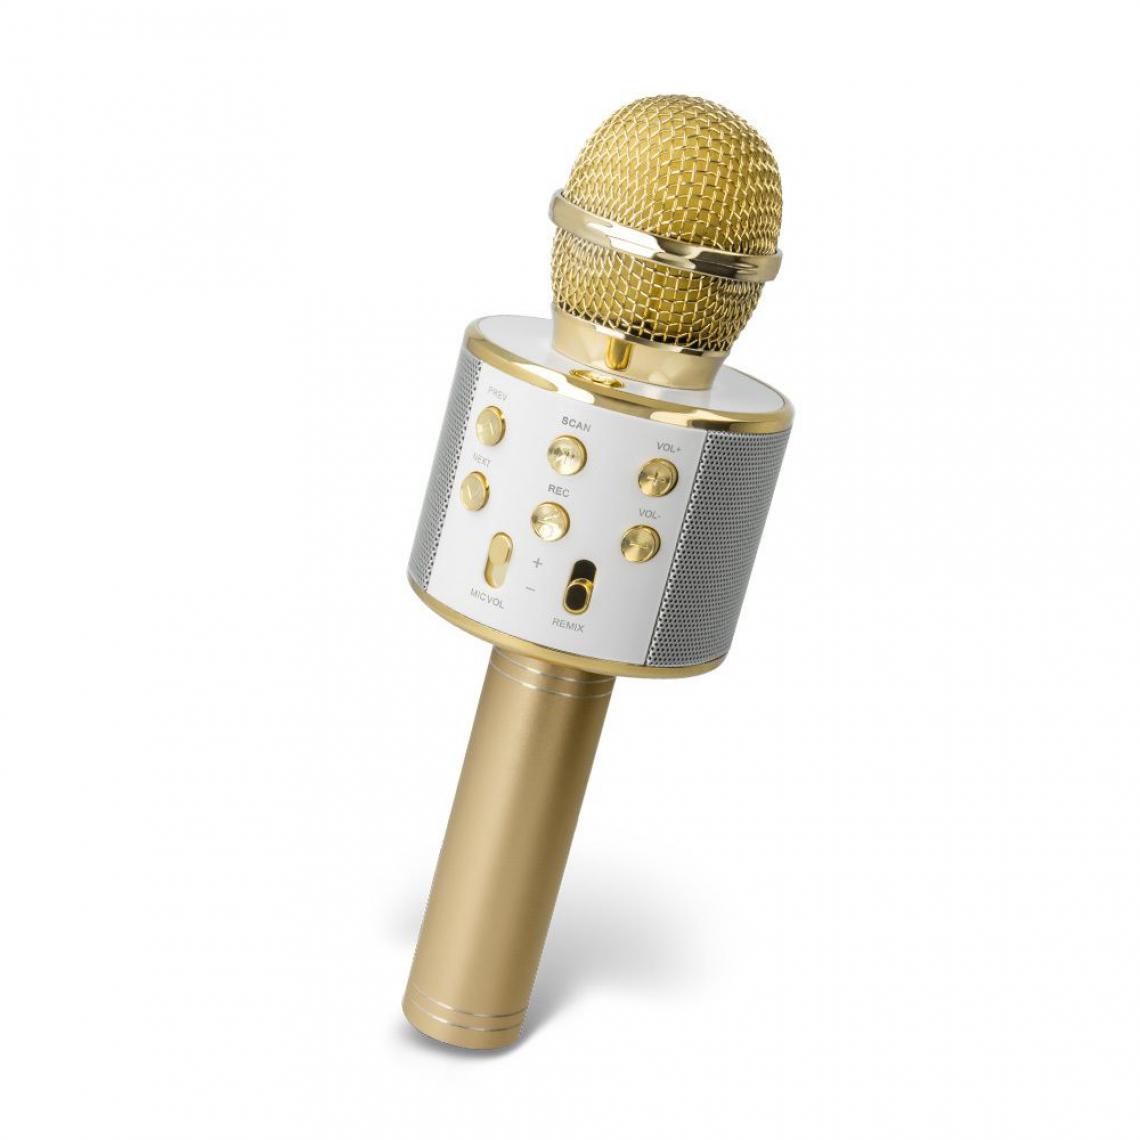 Ozzzo - Microphone Karaoke bluetooth haut parleur ozzzo Gold Or pour SAMSUNG N920 Galaxy Note 5 - Autres accessoires smartphone